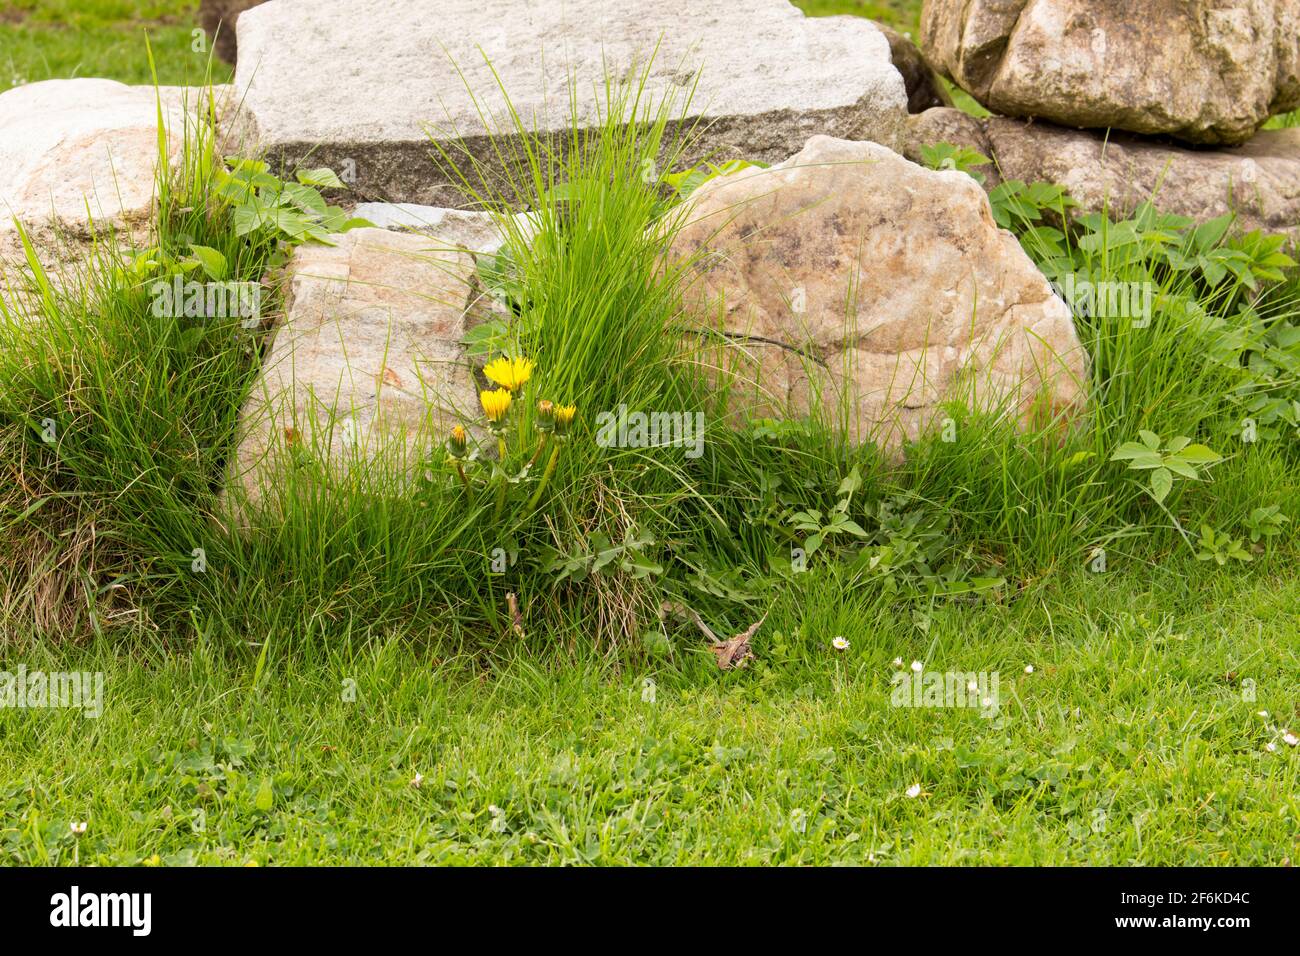 couple of stones on grass Stock Photo